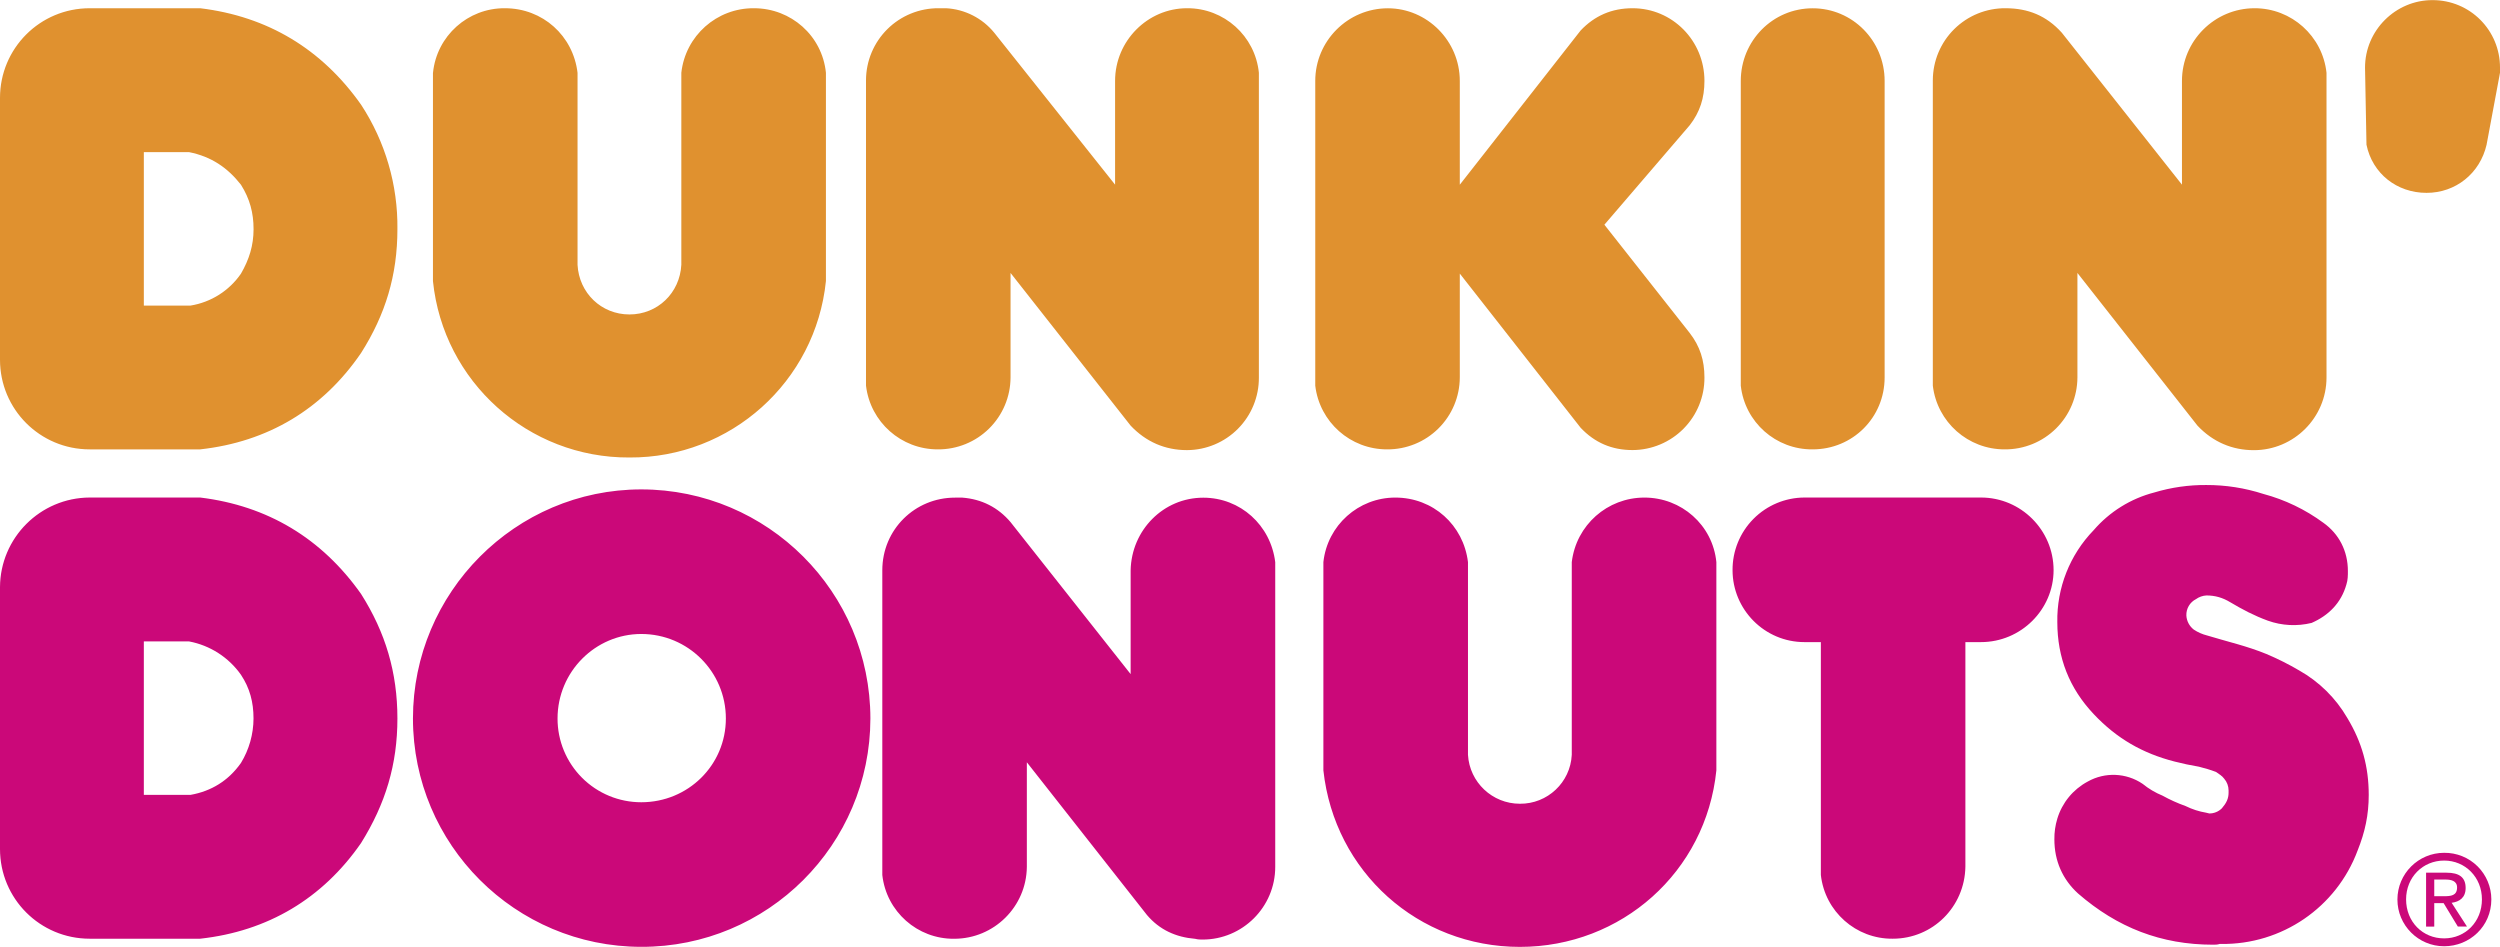 DUNKIN' DONUTS（邓金甜甜圈）矢量logo0